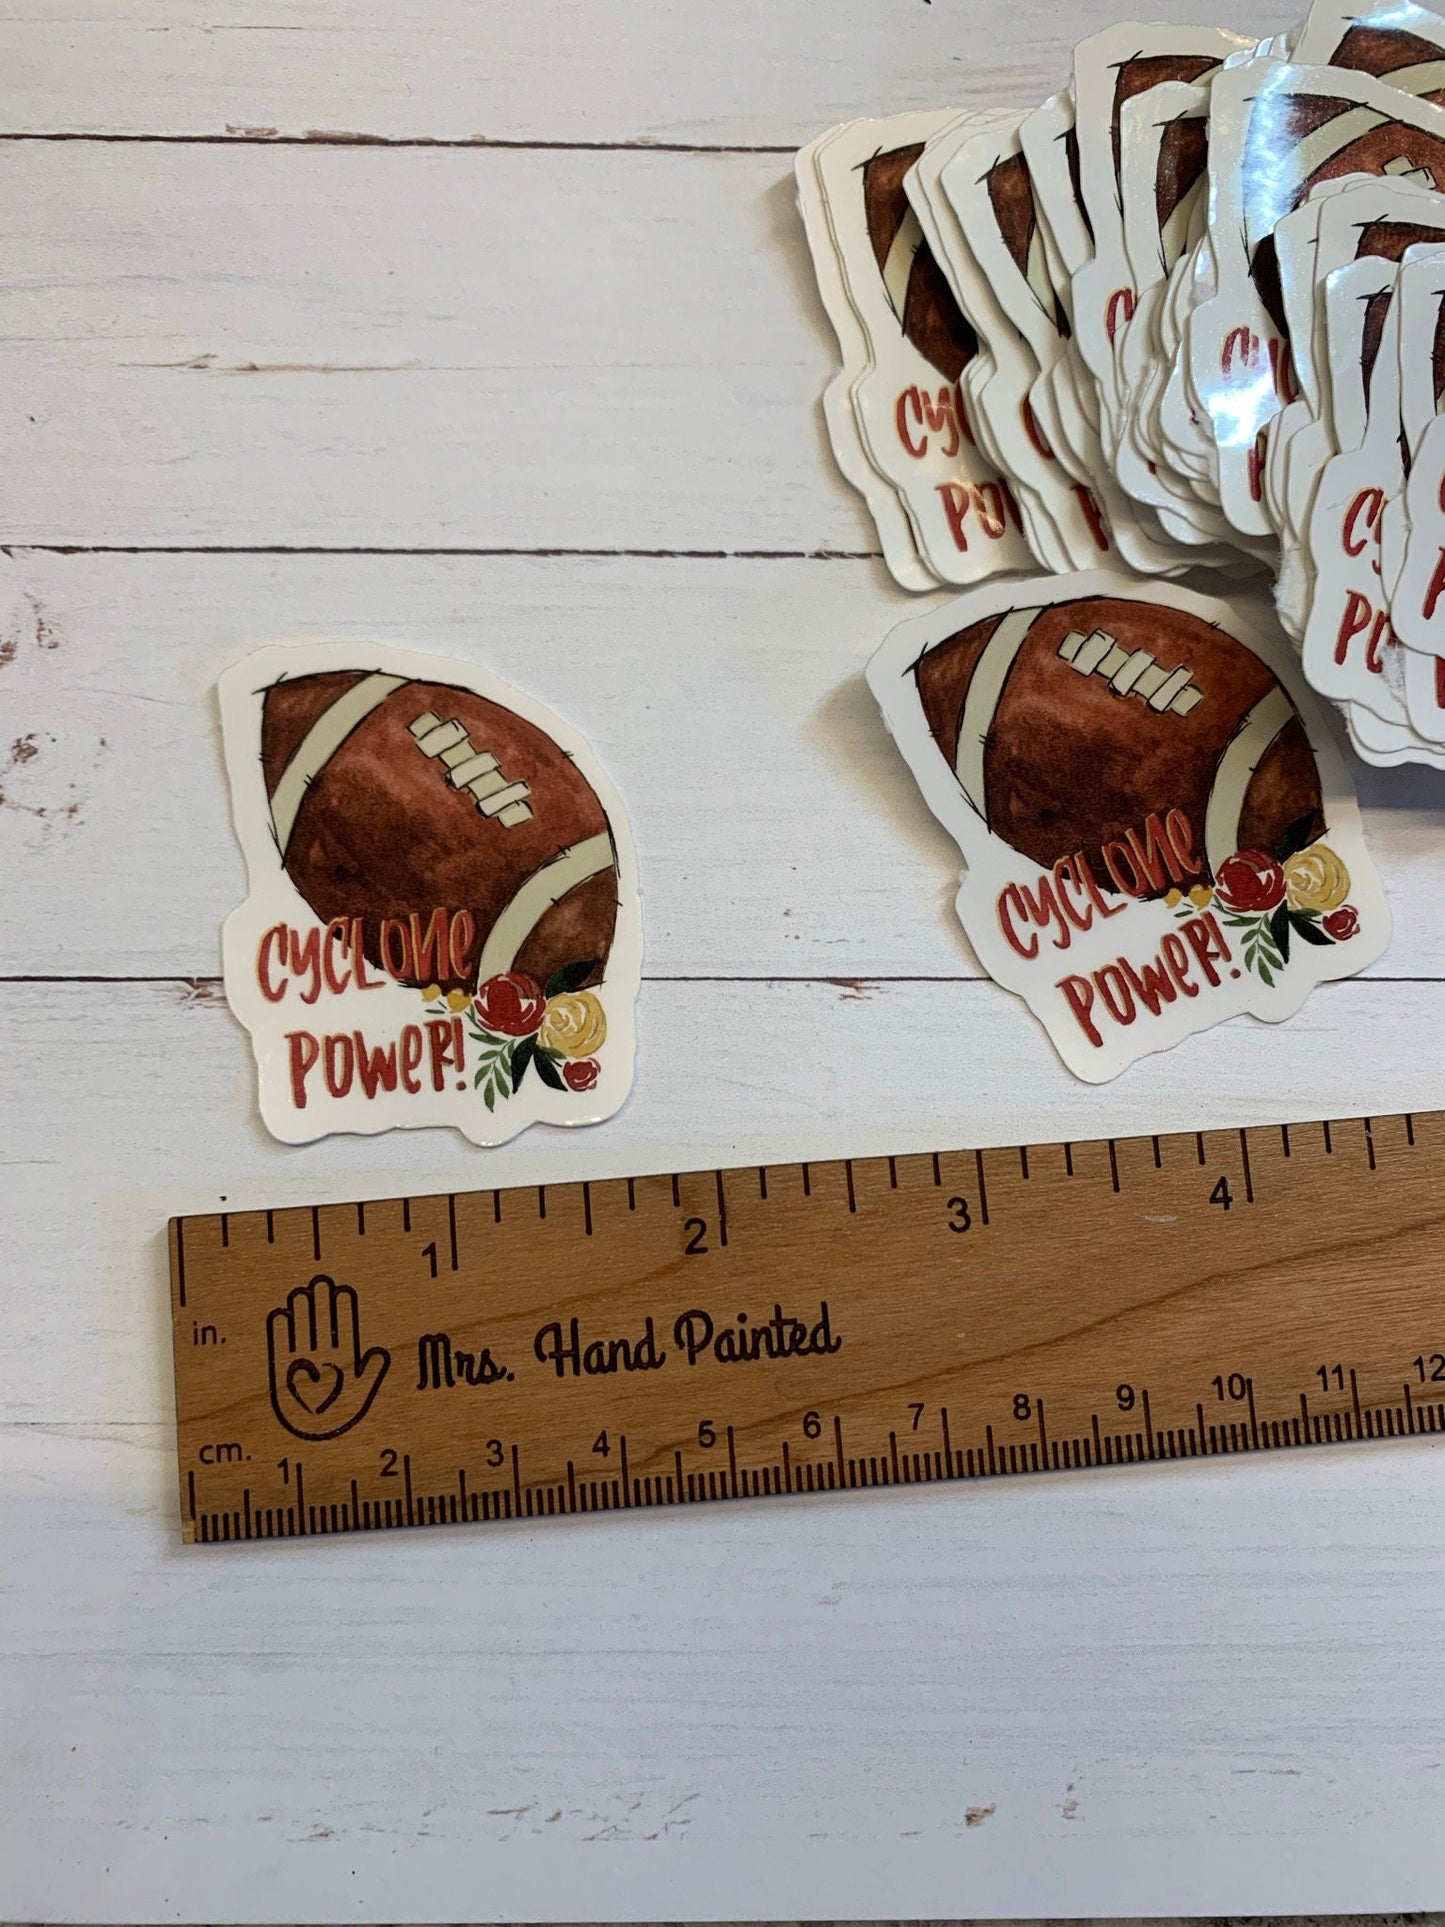 Watercolor "Cyclones Power" Iowa State Football Die Cut Laminated Glossy Vinyl Stickers, Scrapbooking, Game Day Merchandise ISU